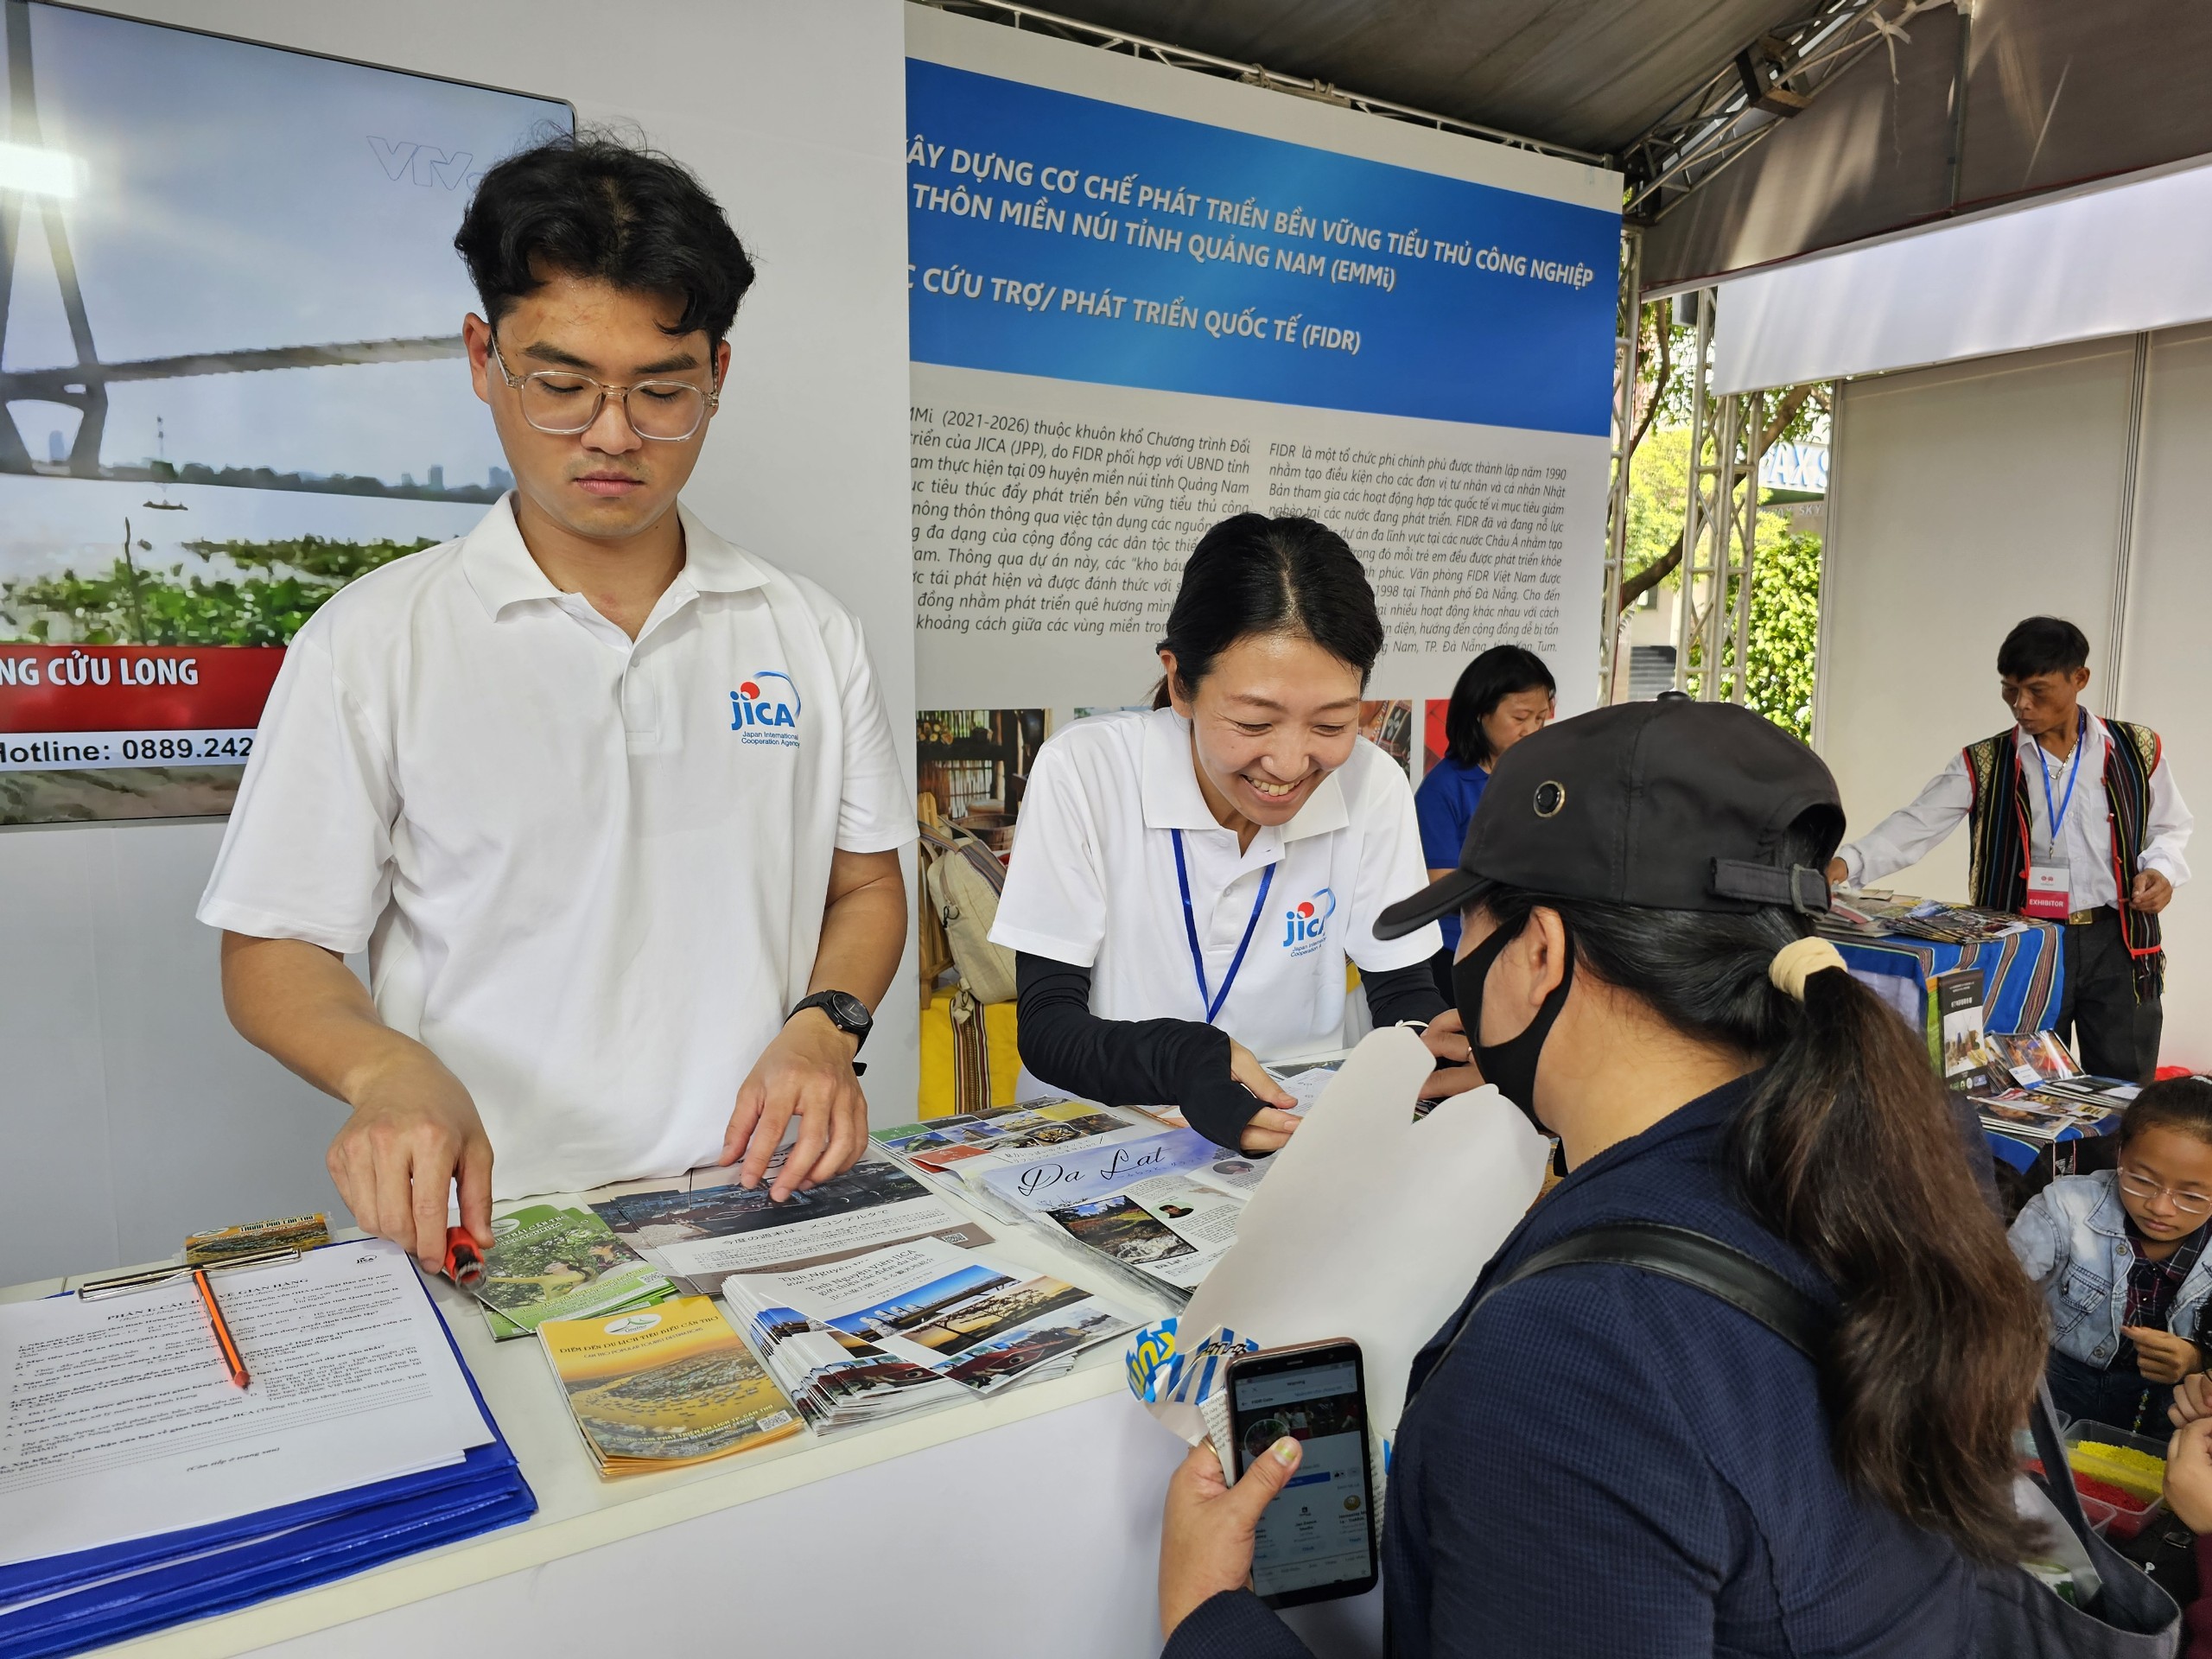 Japanese volunteers promote tourism across Vietnam